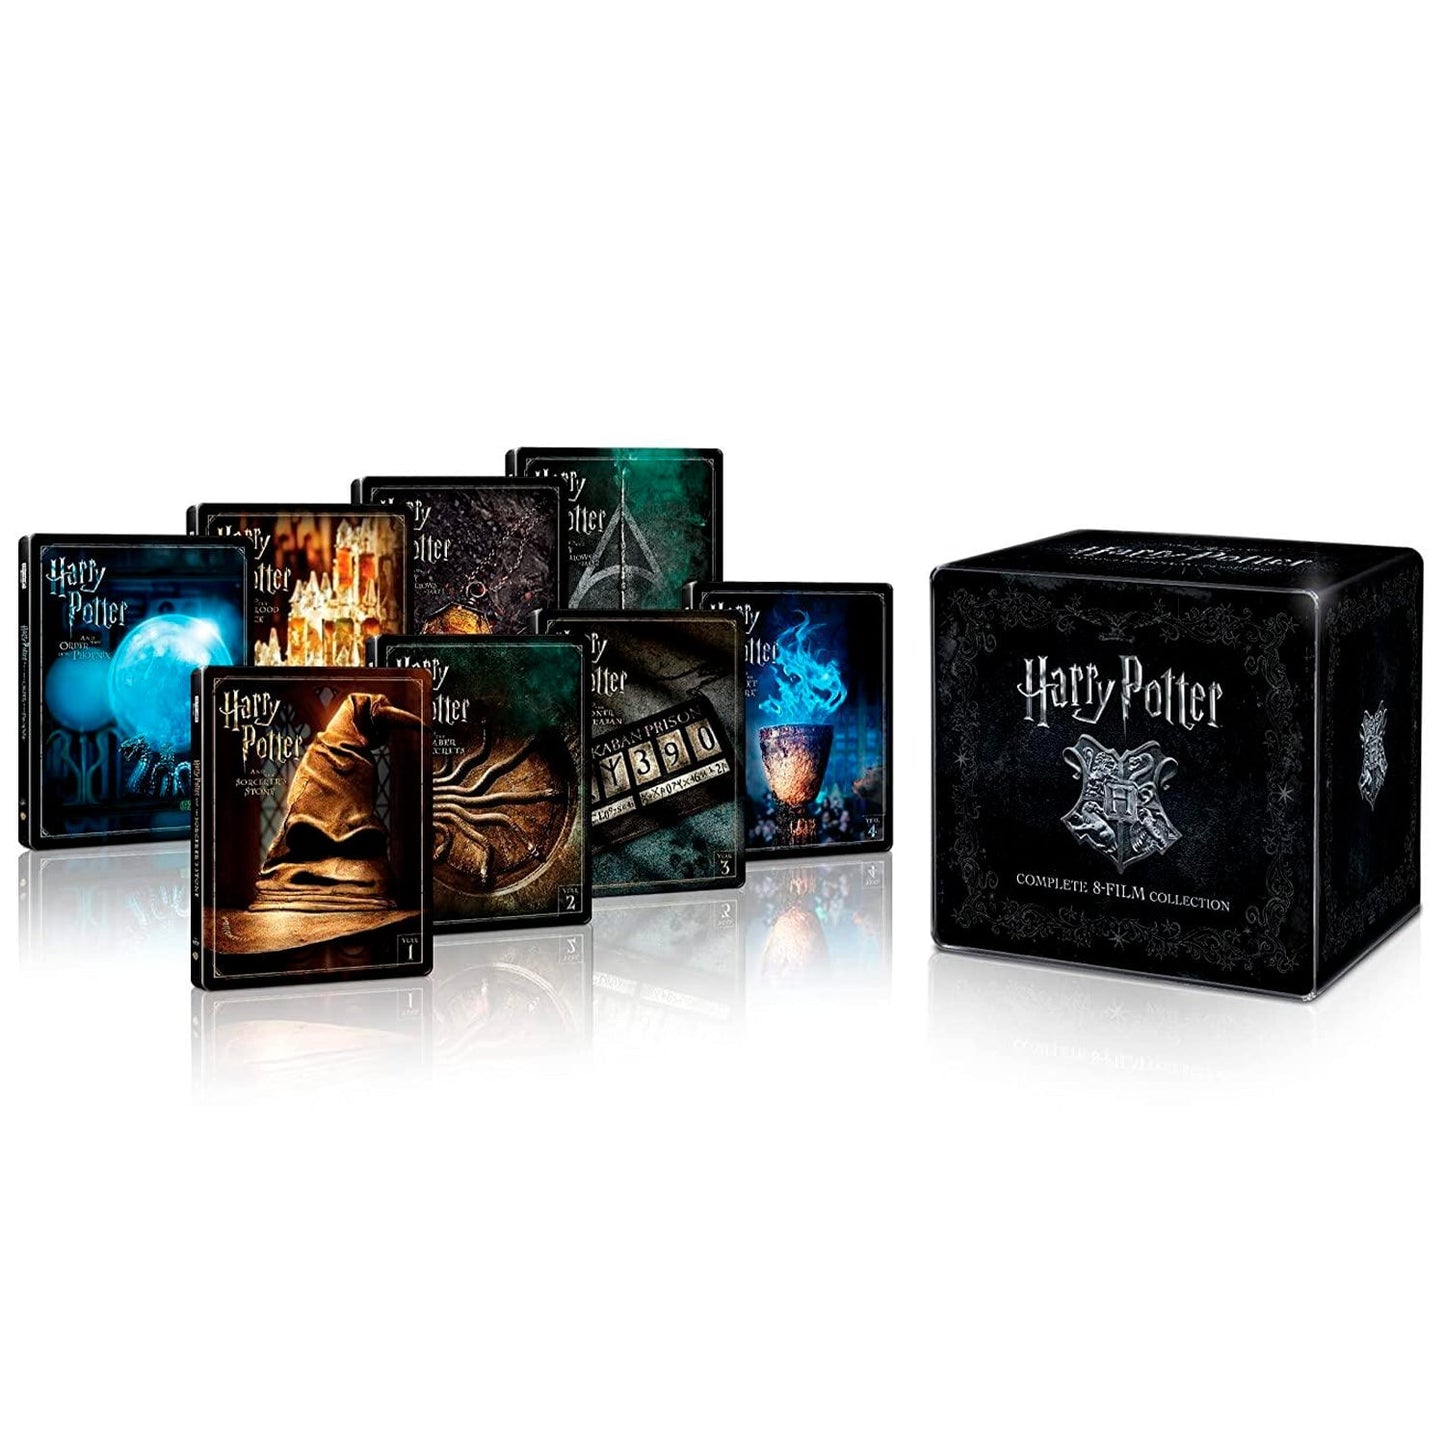 Гарри Поттер: Полная Коллекция (англ. яз.) (4K UHD + Blu-ray) Steelbook